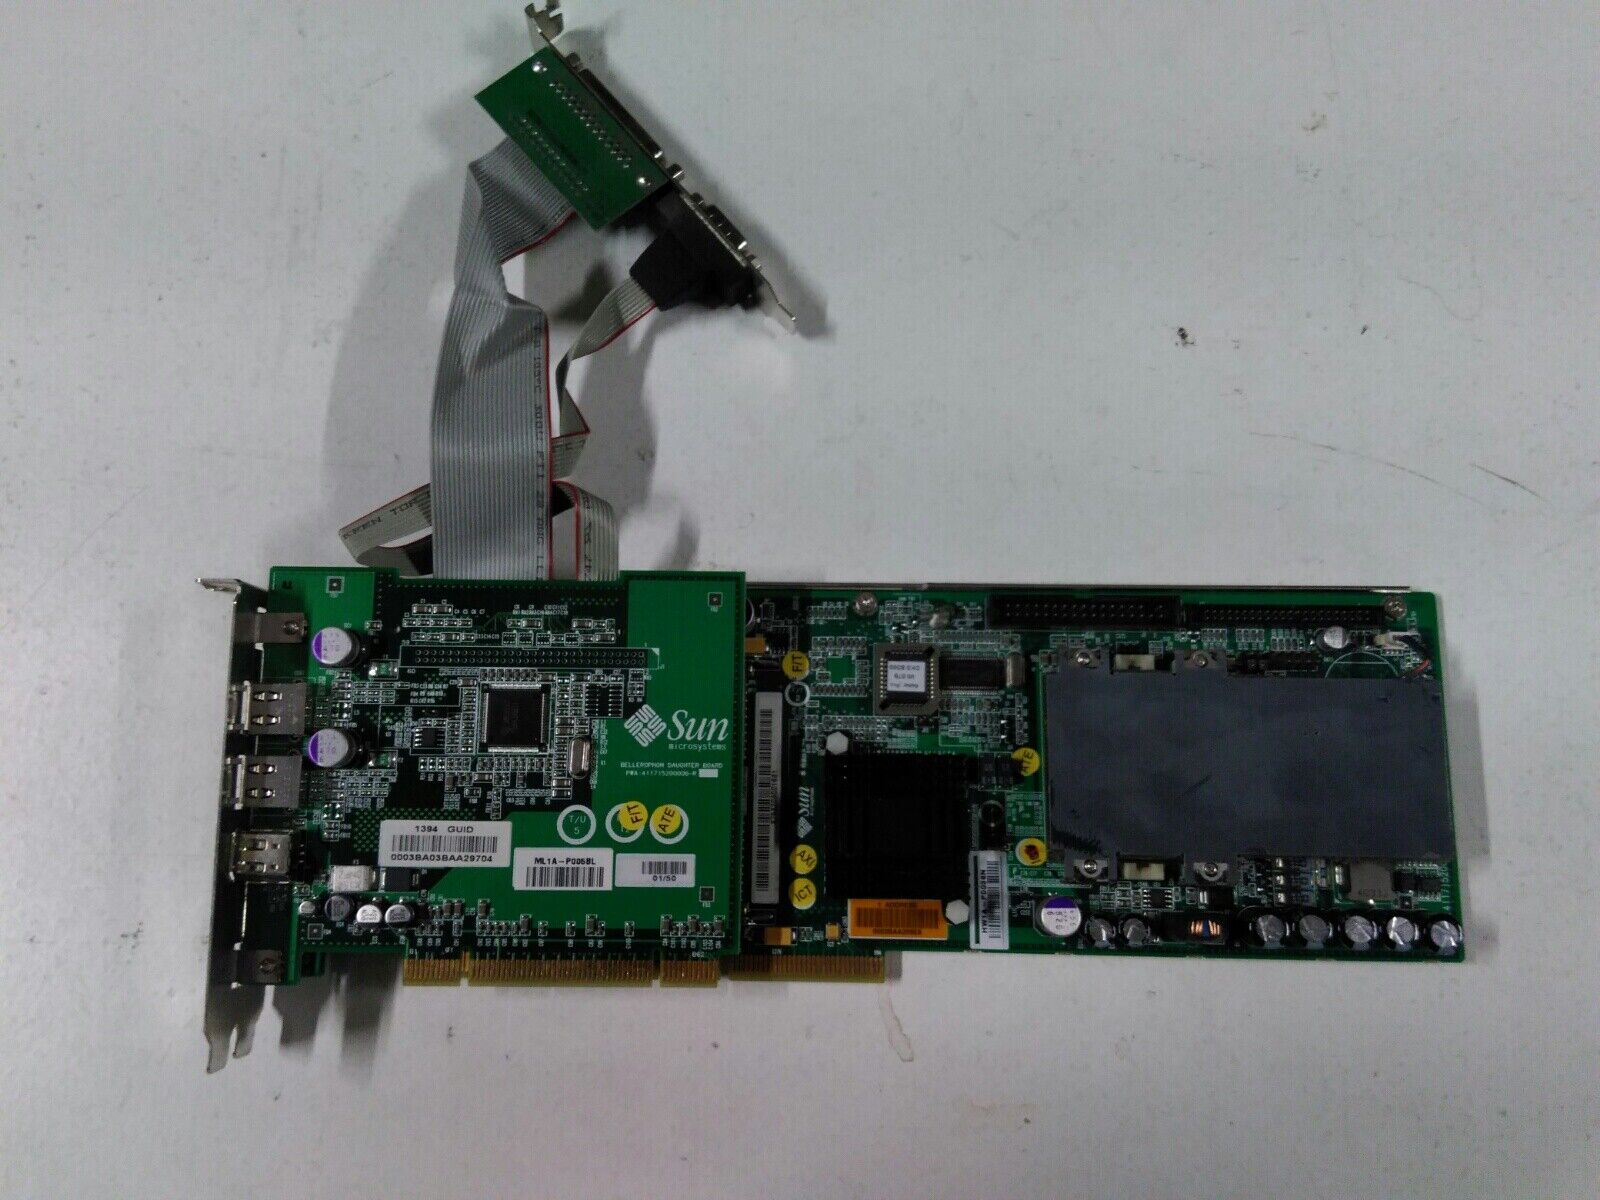 Sun 375-3203 SunPCi IIIpro 1.6Ghz Co-Processor Card, 256MB Memory - X2136A TEST